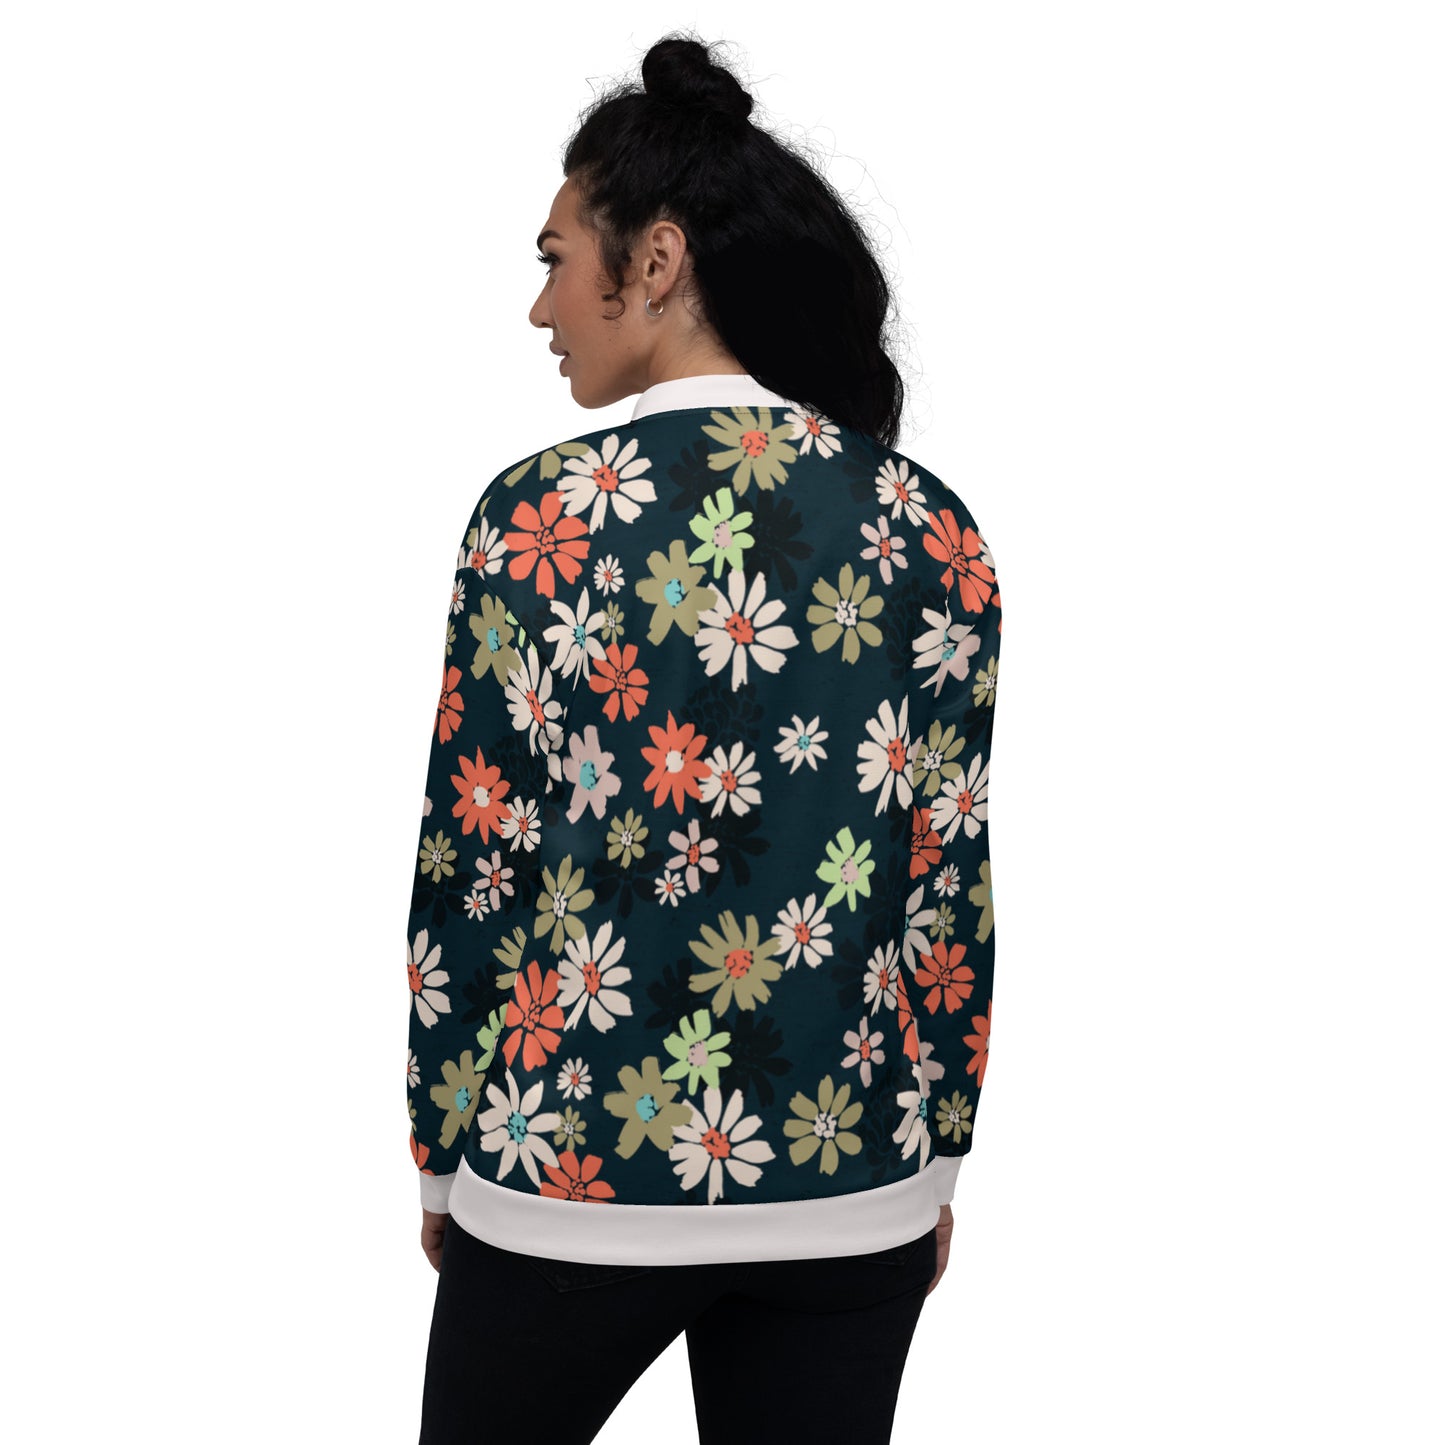 Women Bomber Jacket With Pockets Zipper Daisy Flowers Full Jacket Design by IOBI Original Apparel